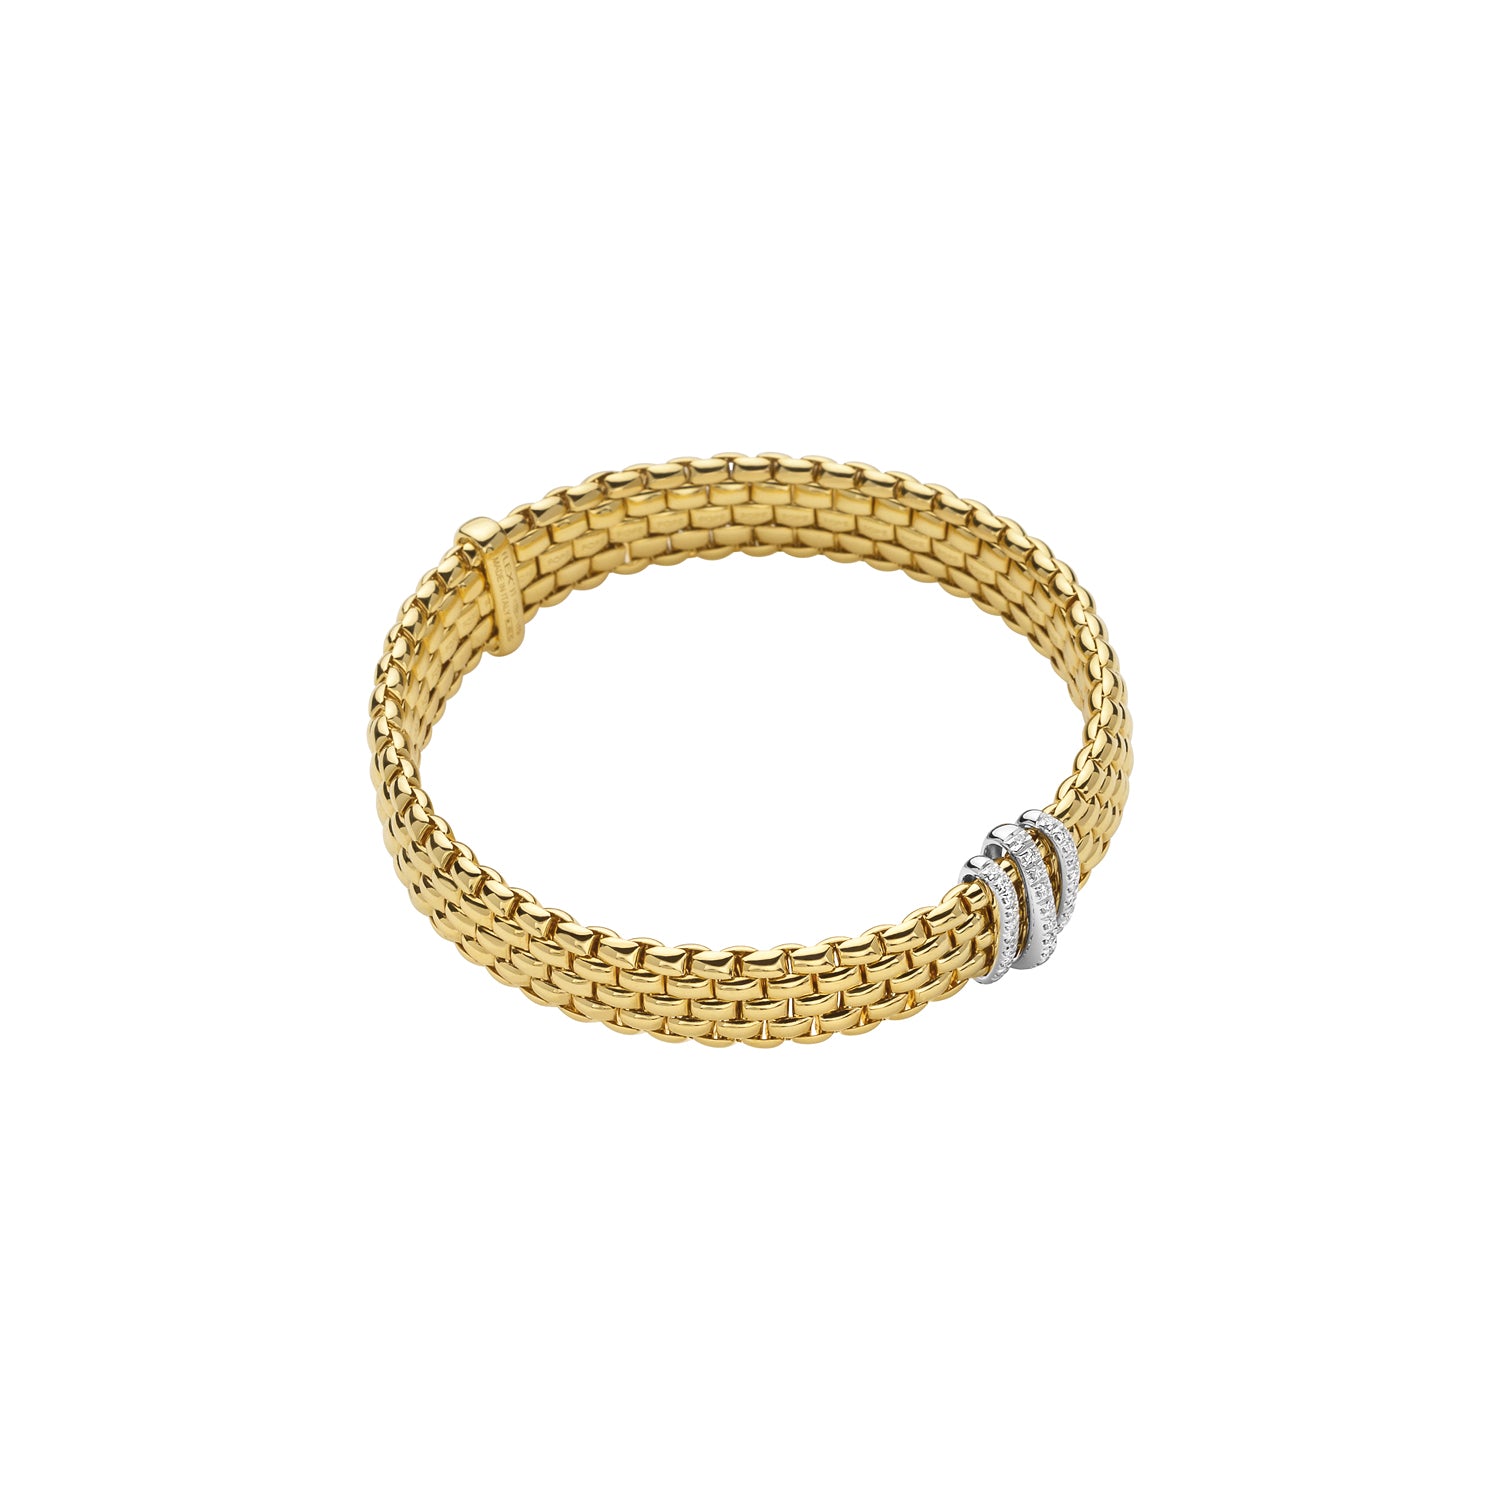 FOPE Bracelet 18K yellow gold with diamonds 0.23ct Size Medium PANORAMA